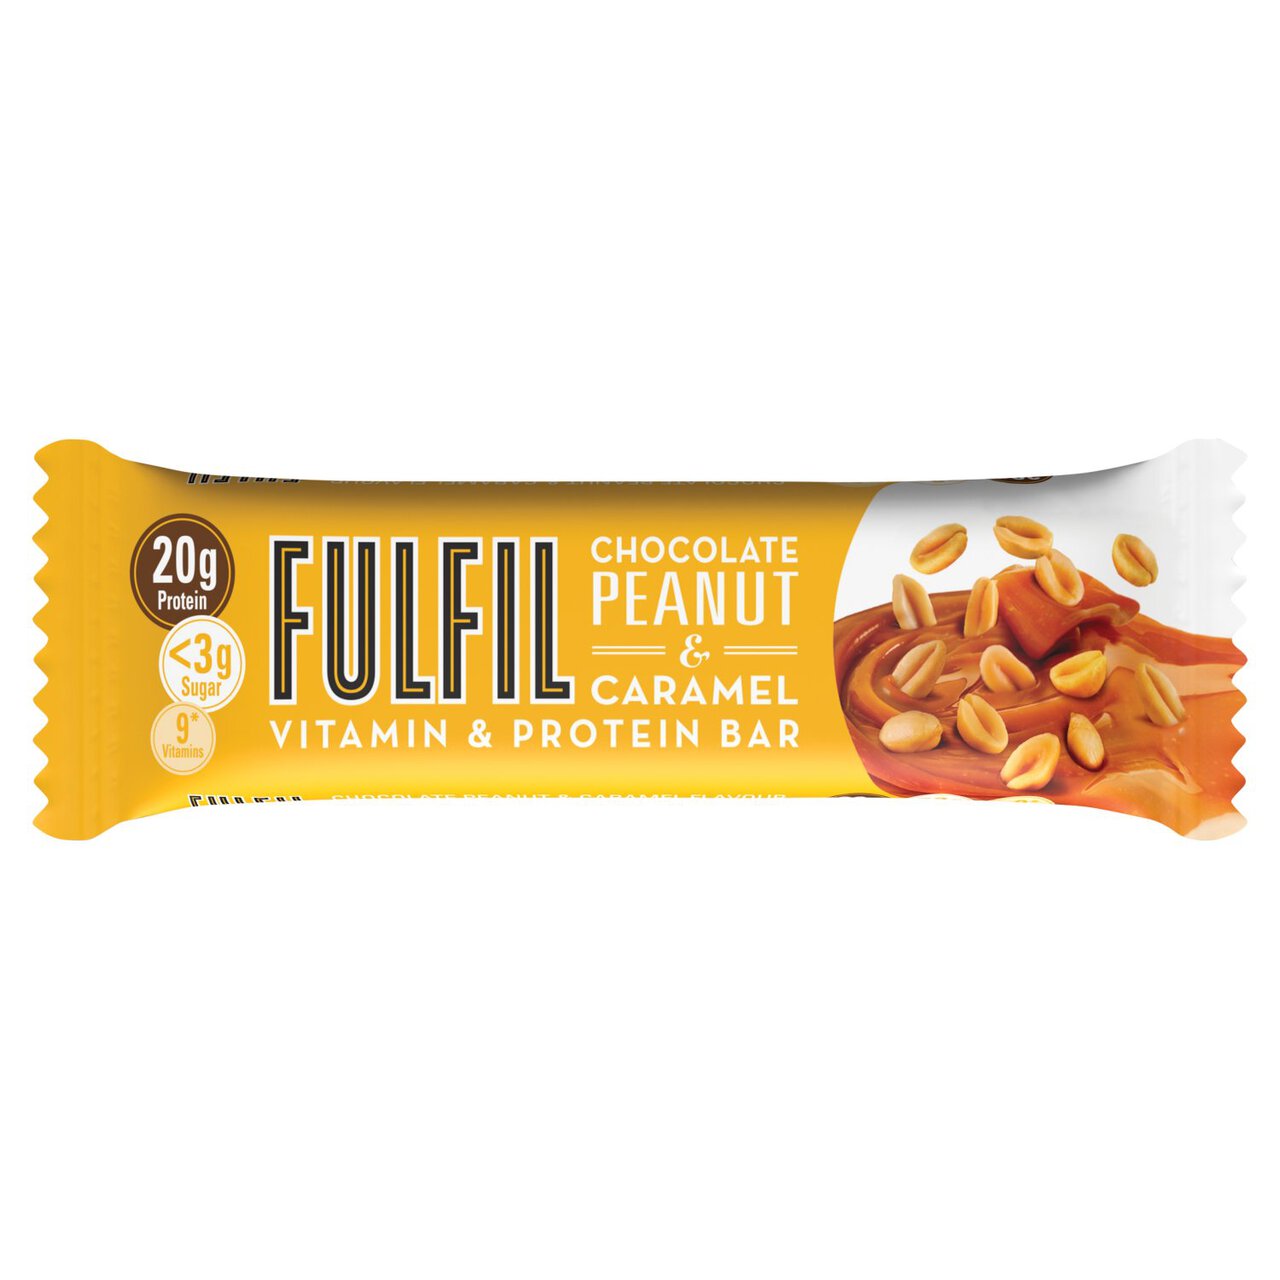 FULFIL Peanut & Caramel Vitamin & Protein Bar 55g